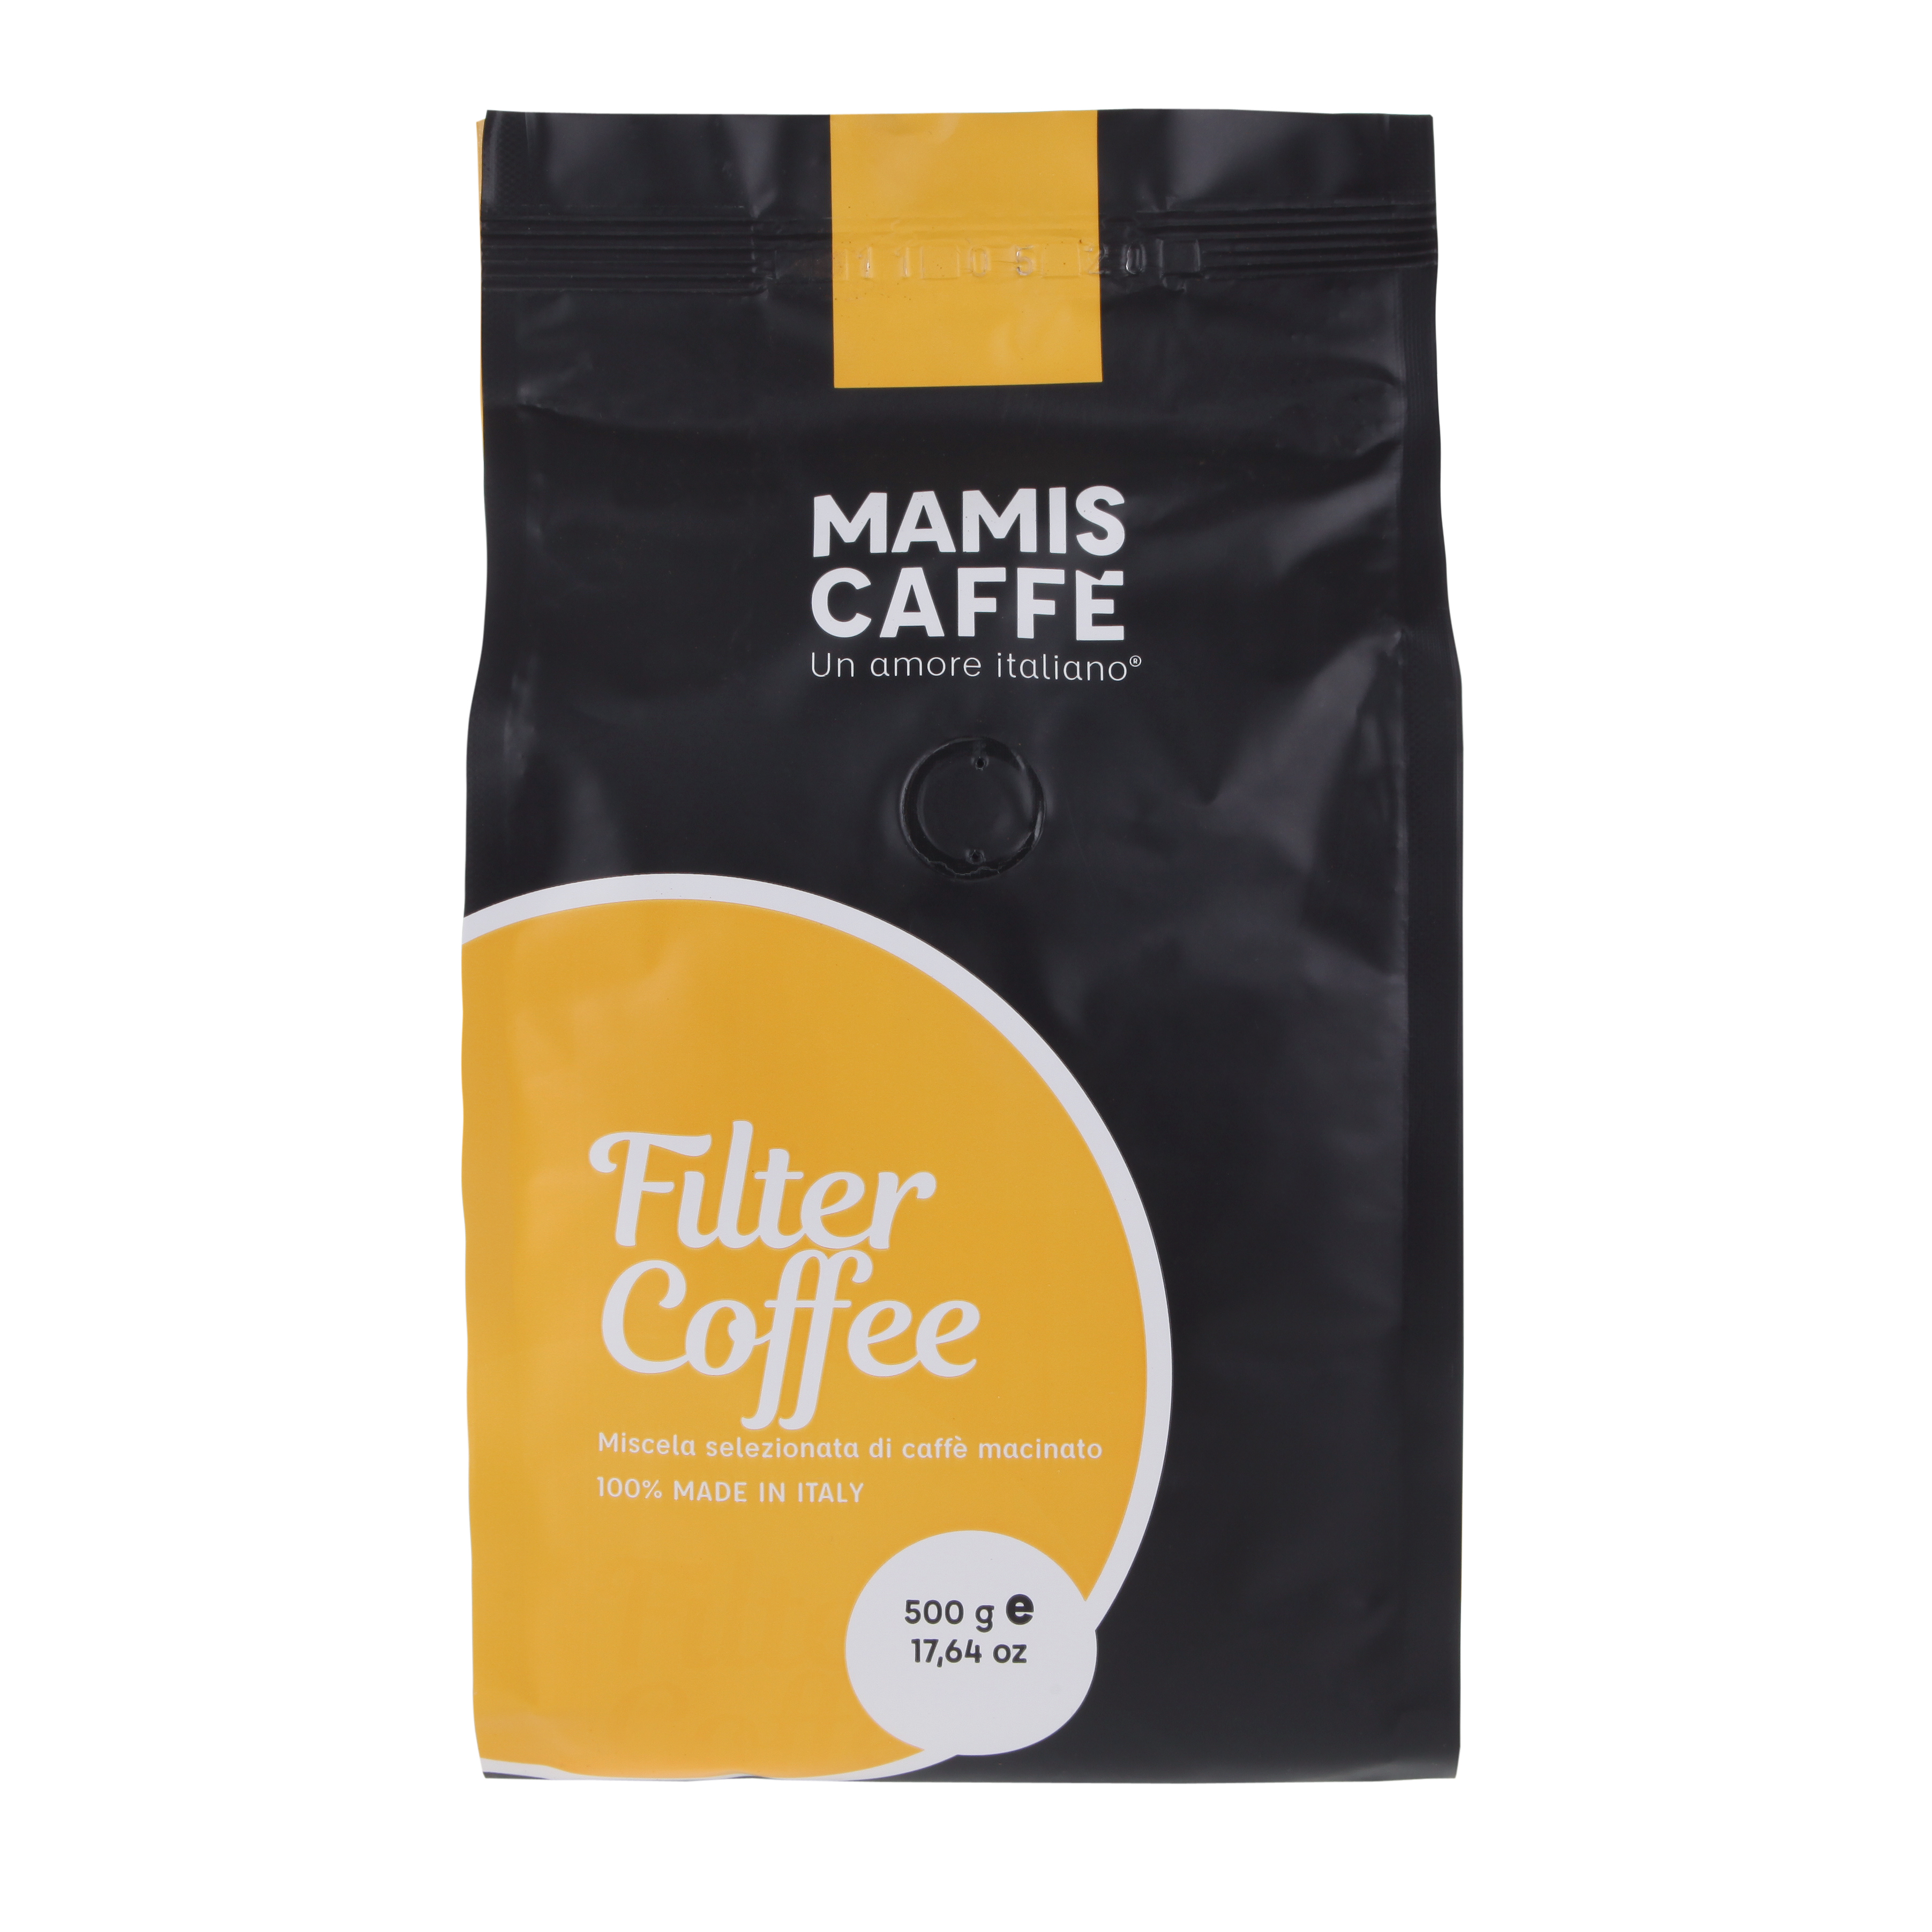 Mamis Caffè Filter coffee